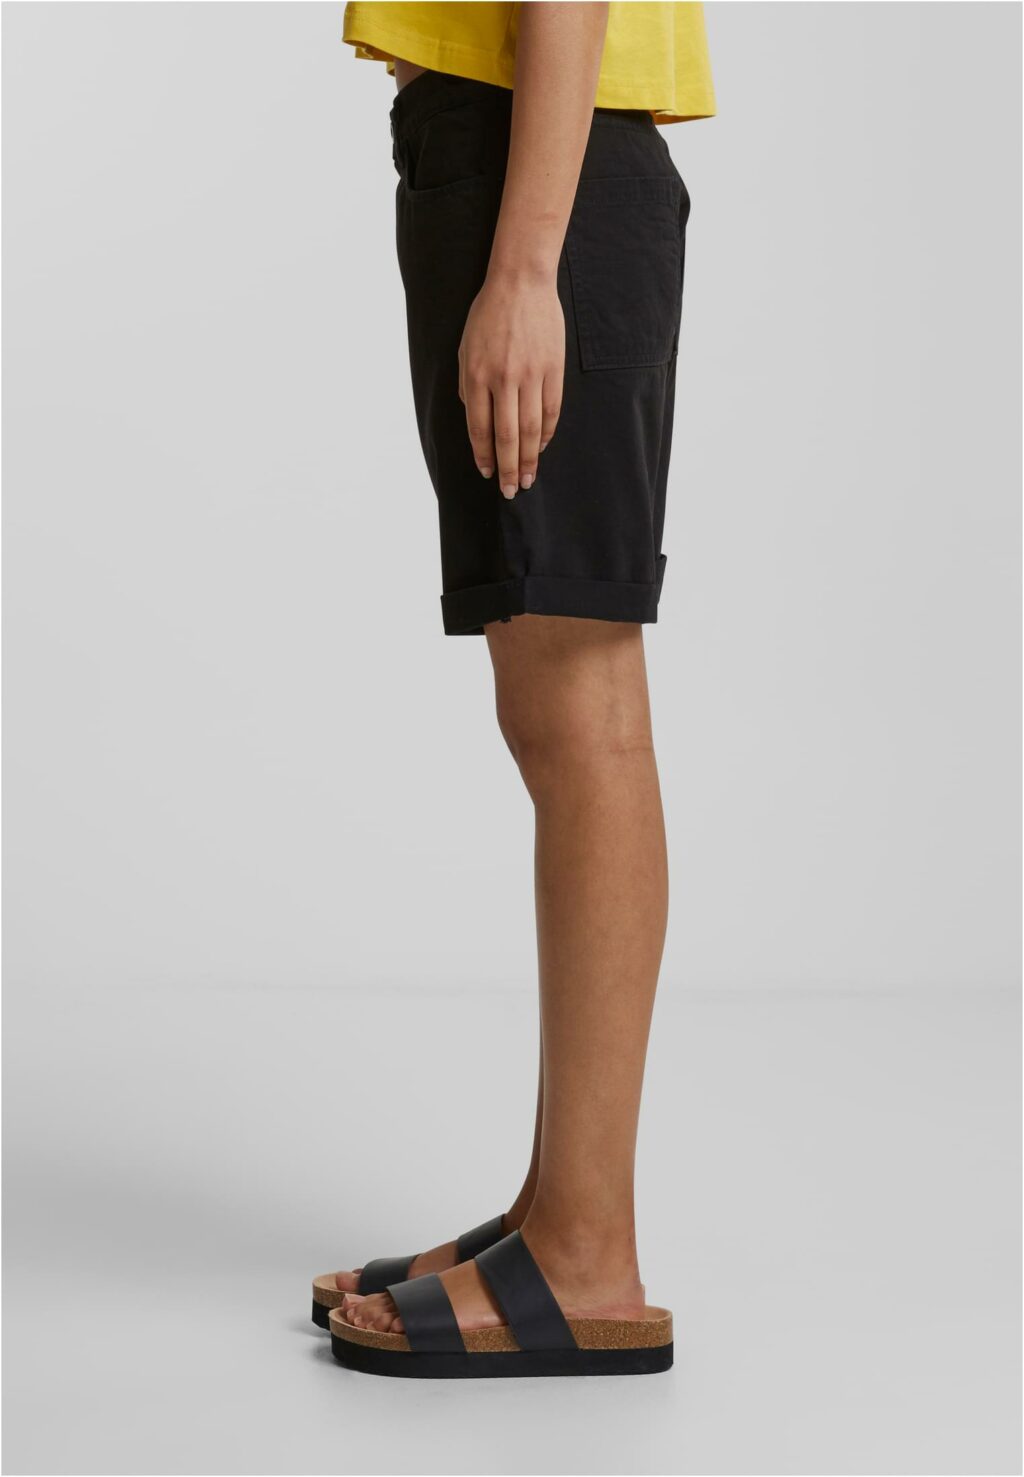 Urban Classics Ladies Organic Cotton Bermuda Pants black TB6210